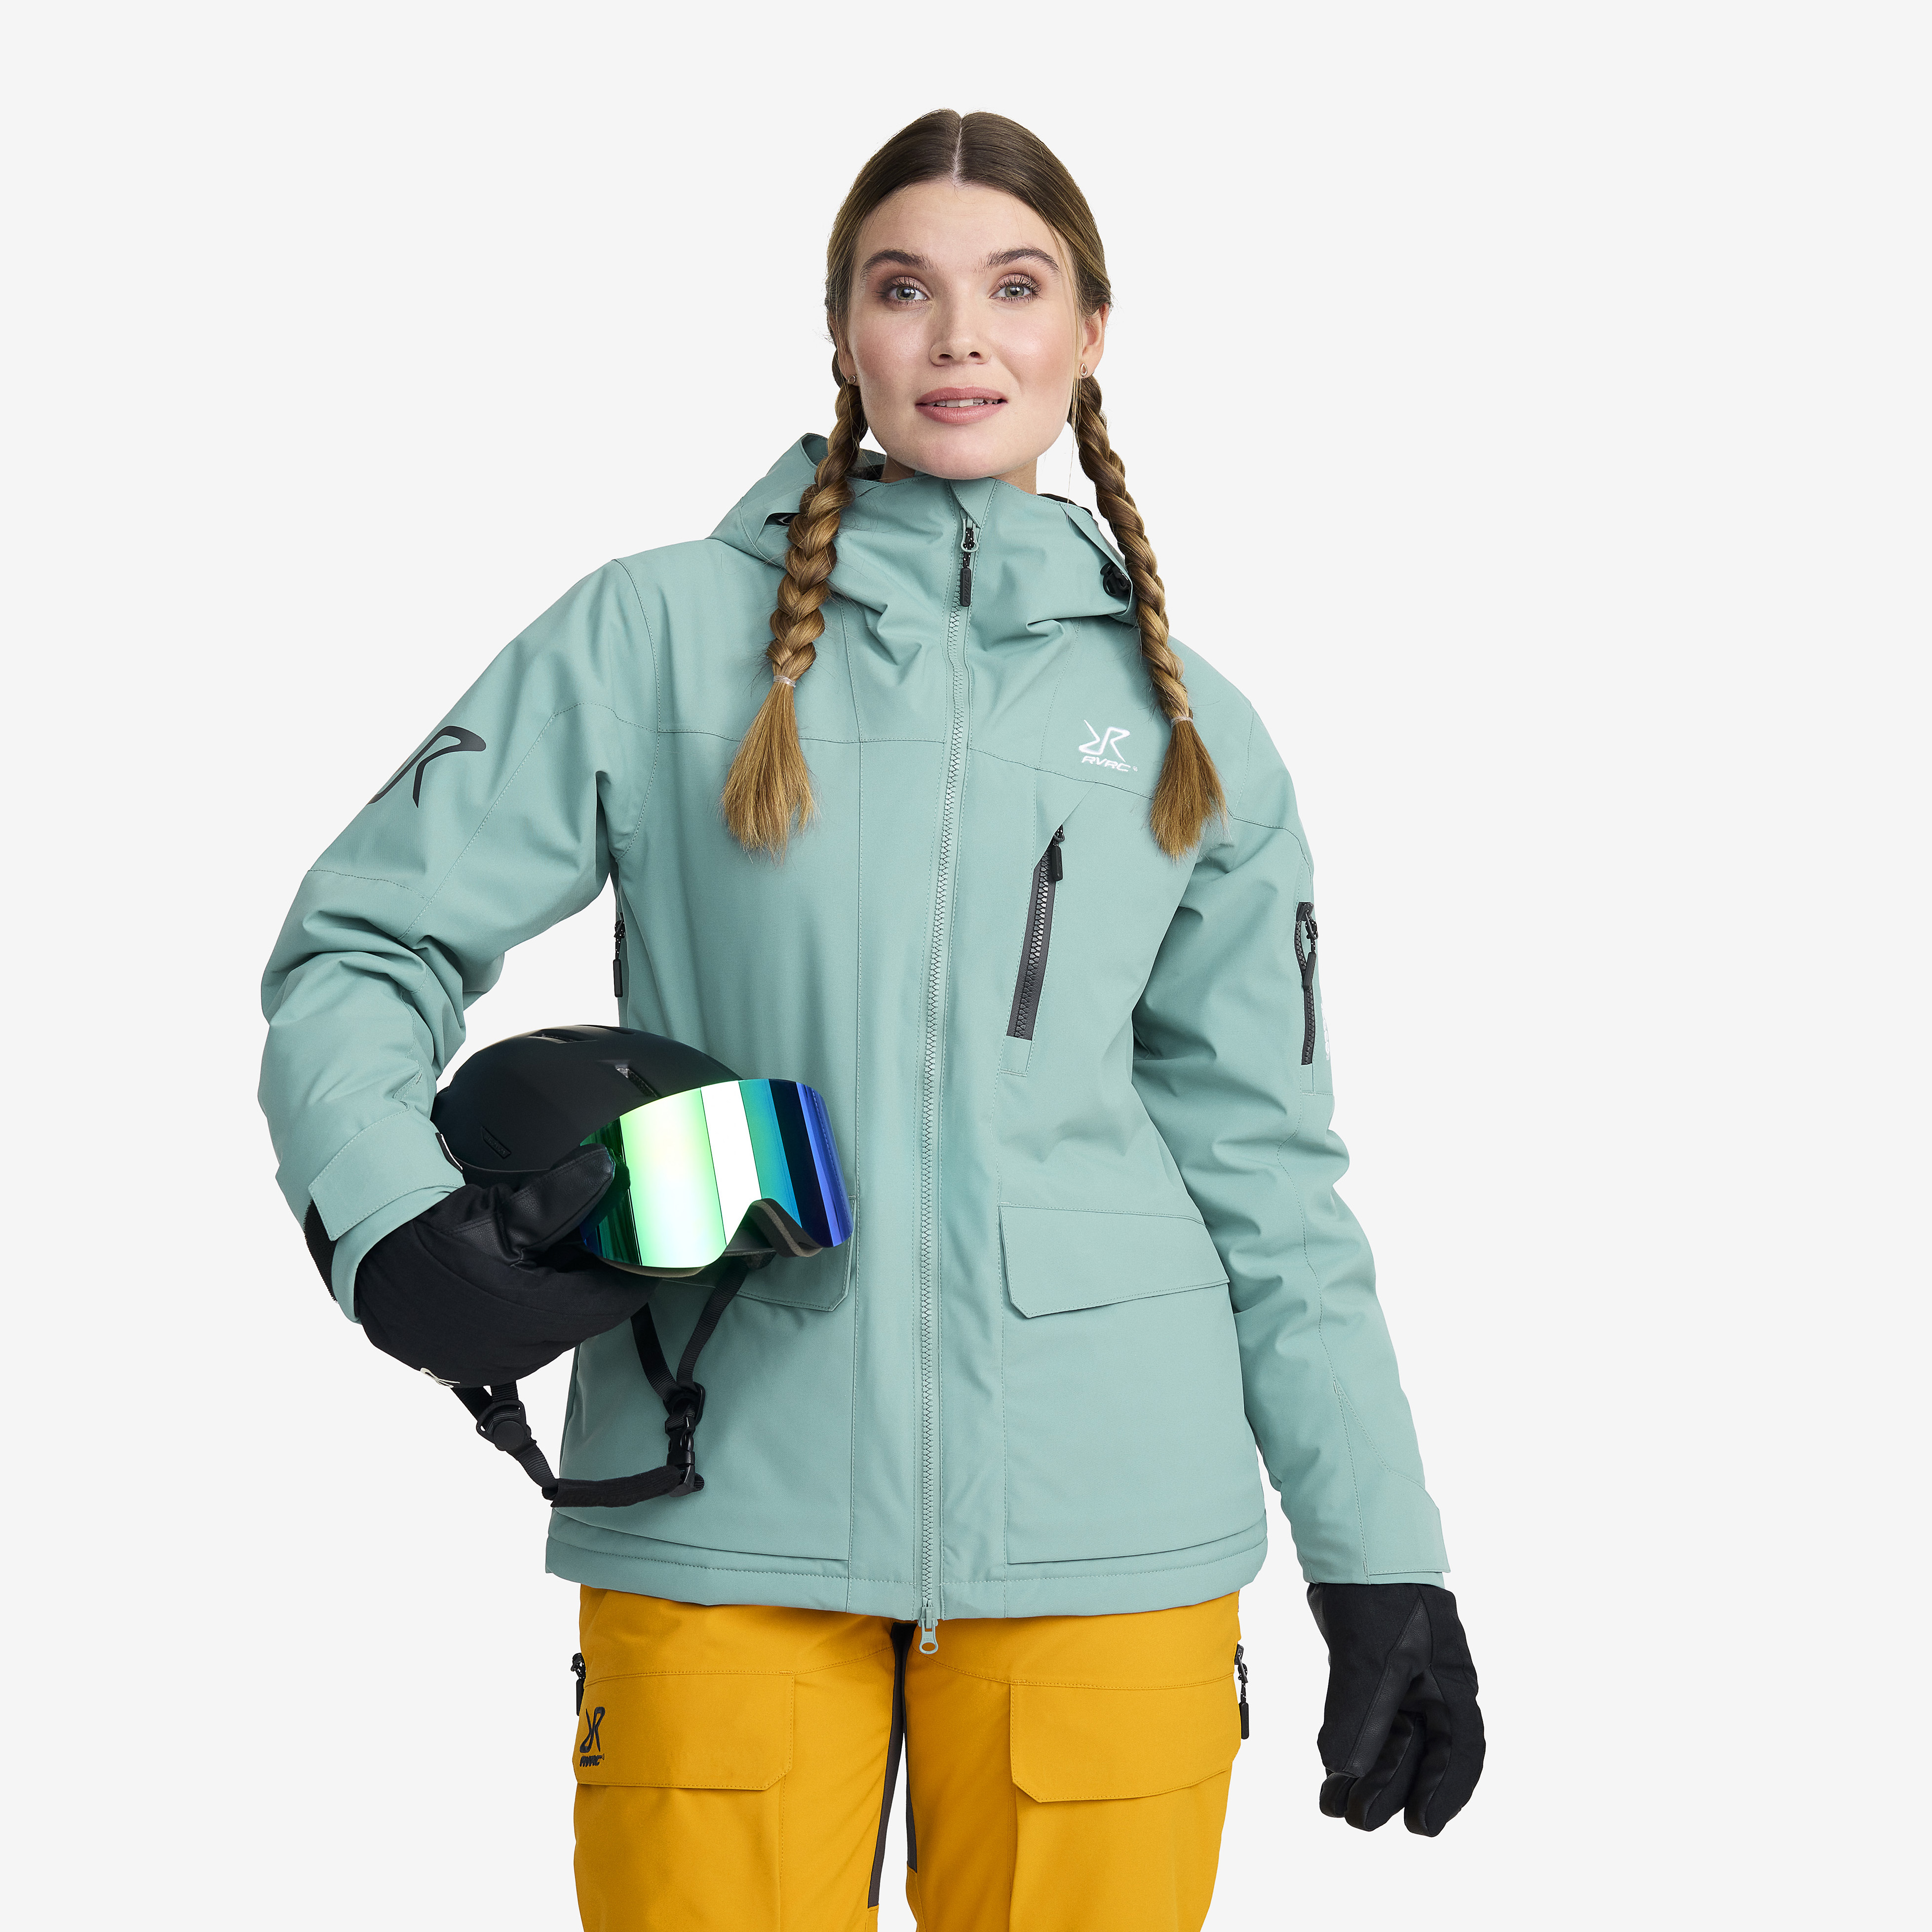 Women's White ROXY Puffer Ski Jacket & Citron Yellow Ski Pants.